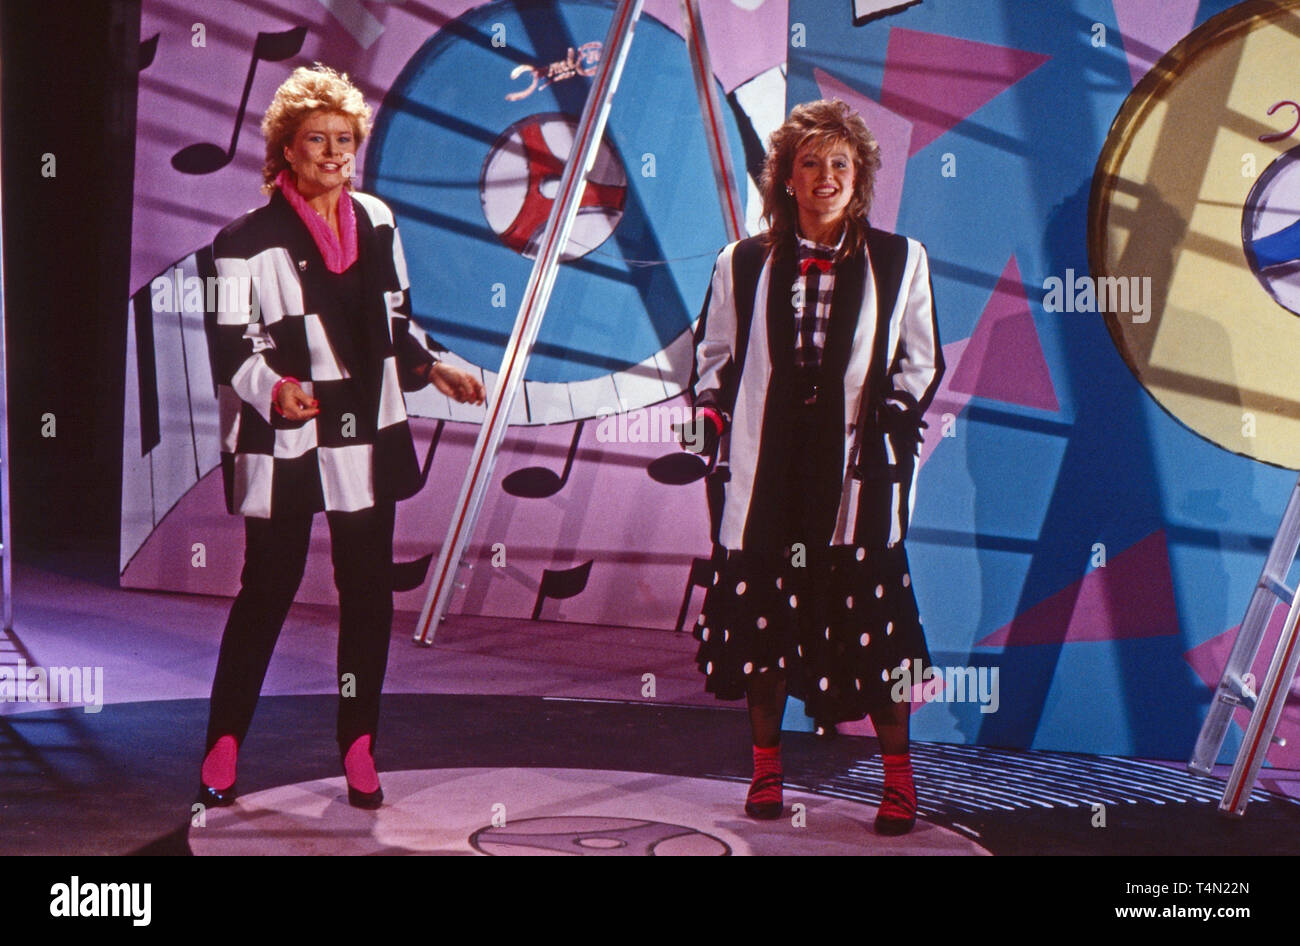 Bobbysocks, norwegisches Popduo, bestehend aus Hanne Krogh und Elisabeth Andreassen, bei einem Auftritt in der Chartshow "Formel Eins" en München, Alemania 1985. "Dúo pop noruego Bobbysocks" actuando en el espectáculo 'Gráfico de televisión alemán Formel Eins" en Munich, Alemania 1985. Foto de stock